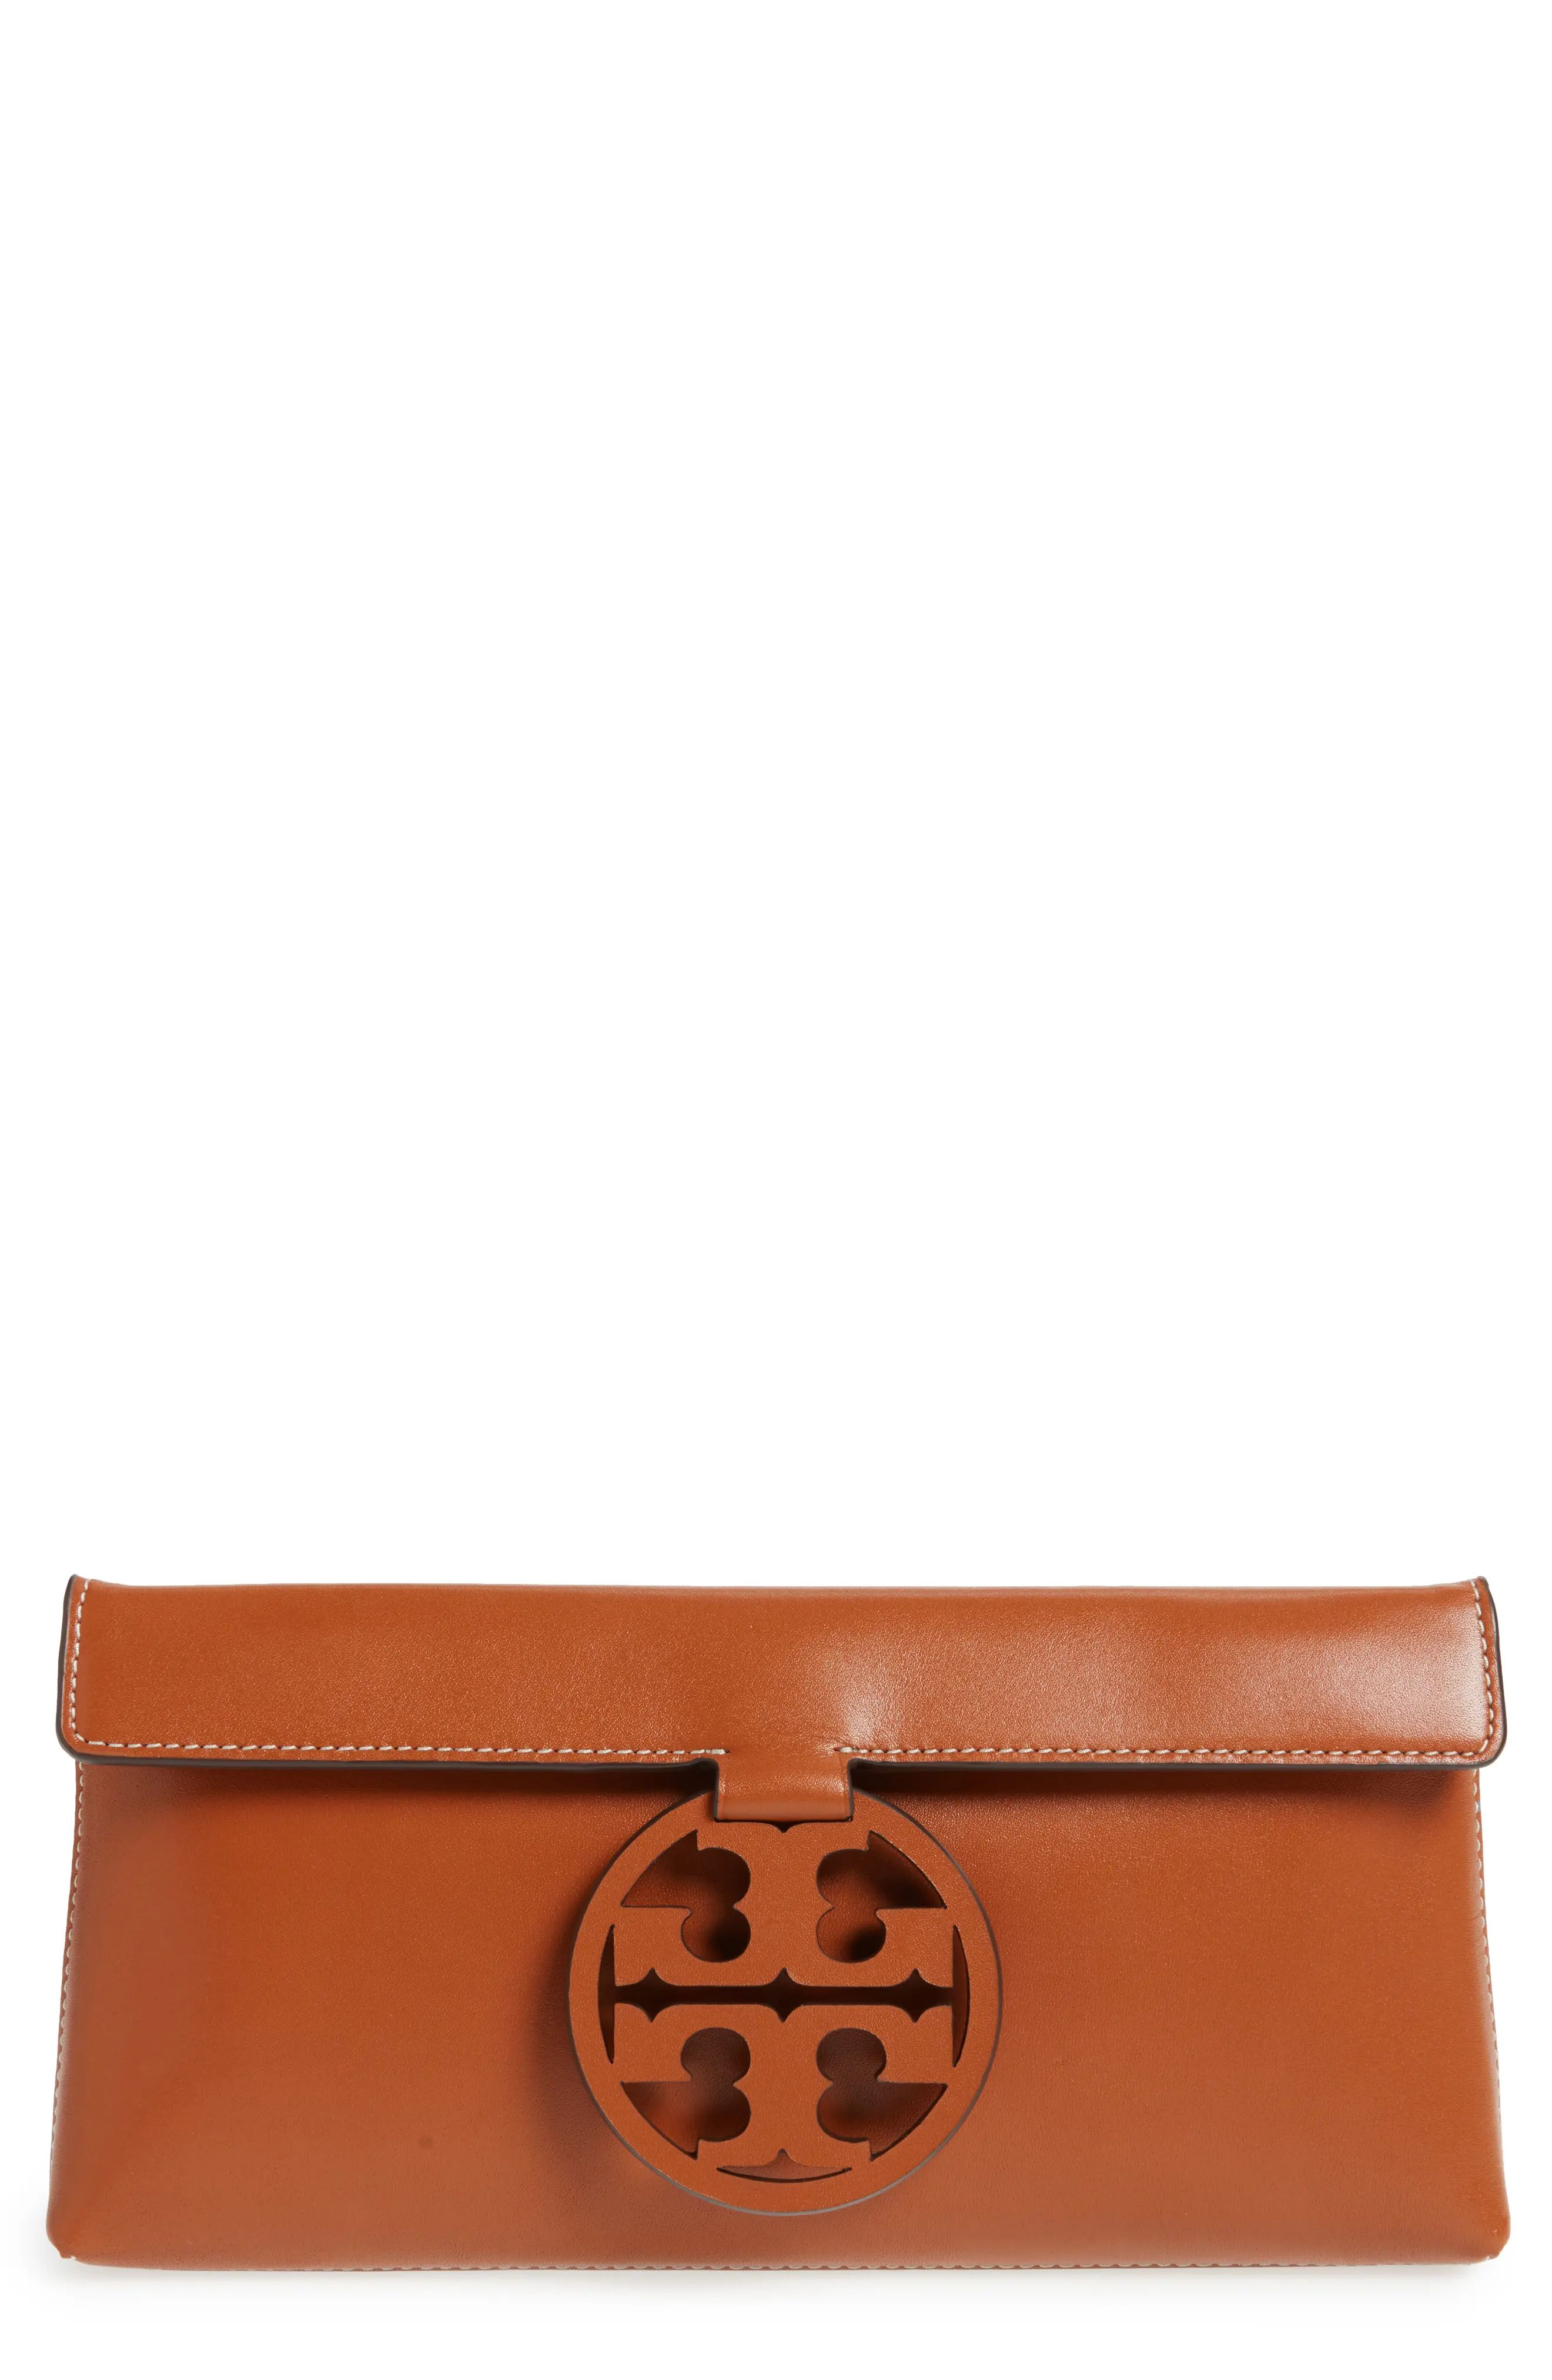 Miller Leather Clutch | Nordstrom